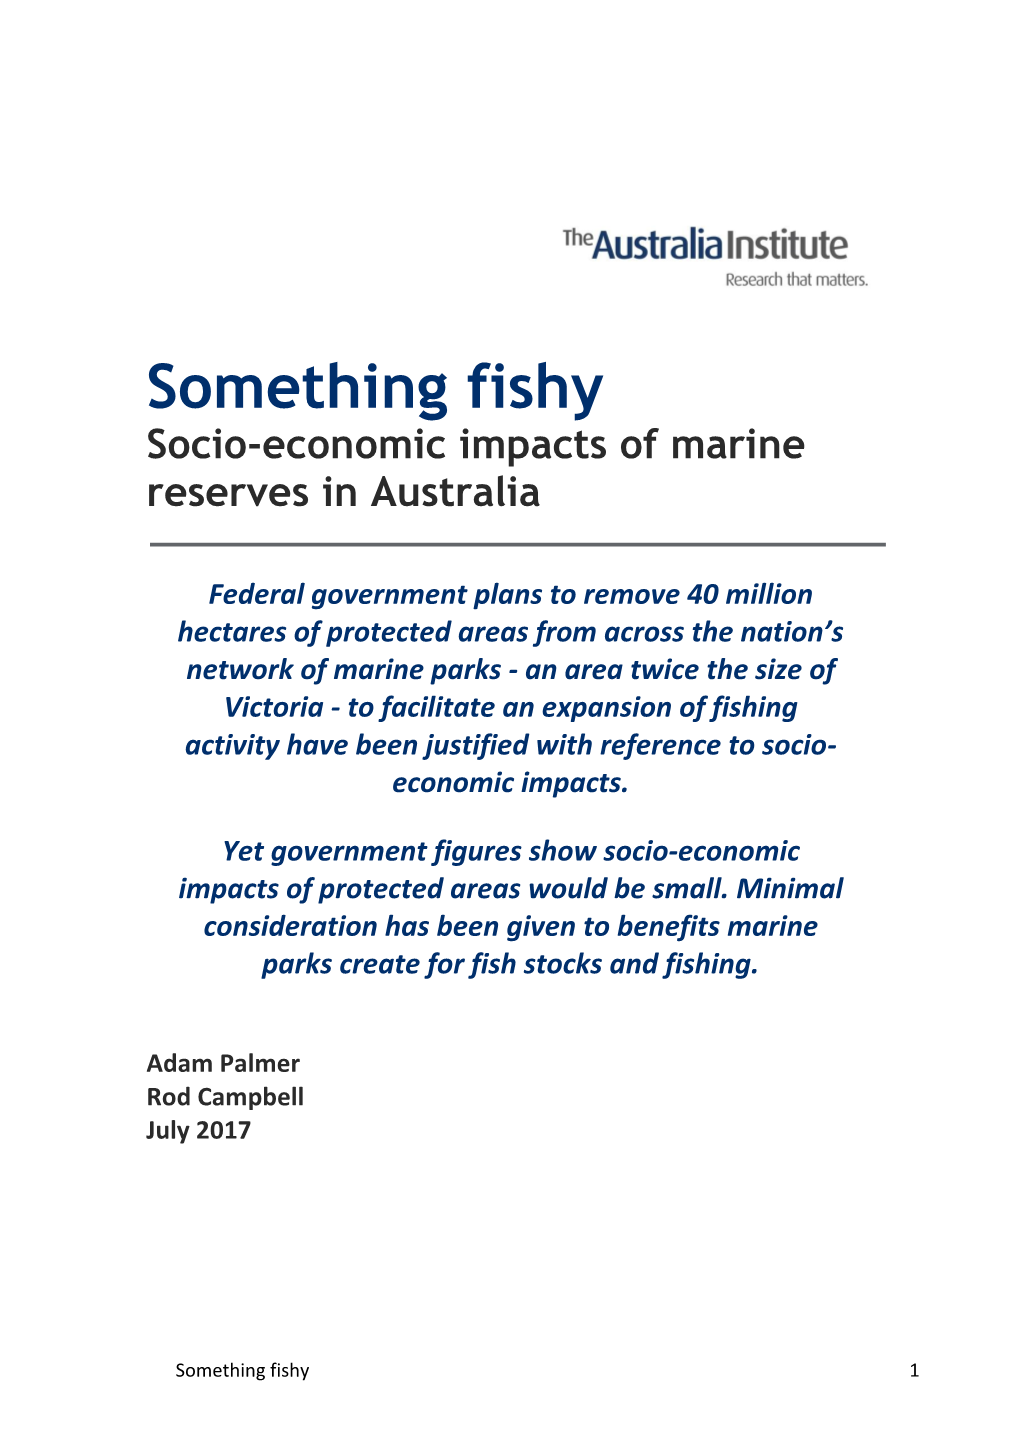 Something Fishy Socio-Economic Impacts of Marine Reserves in Australia